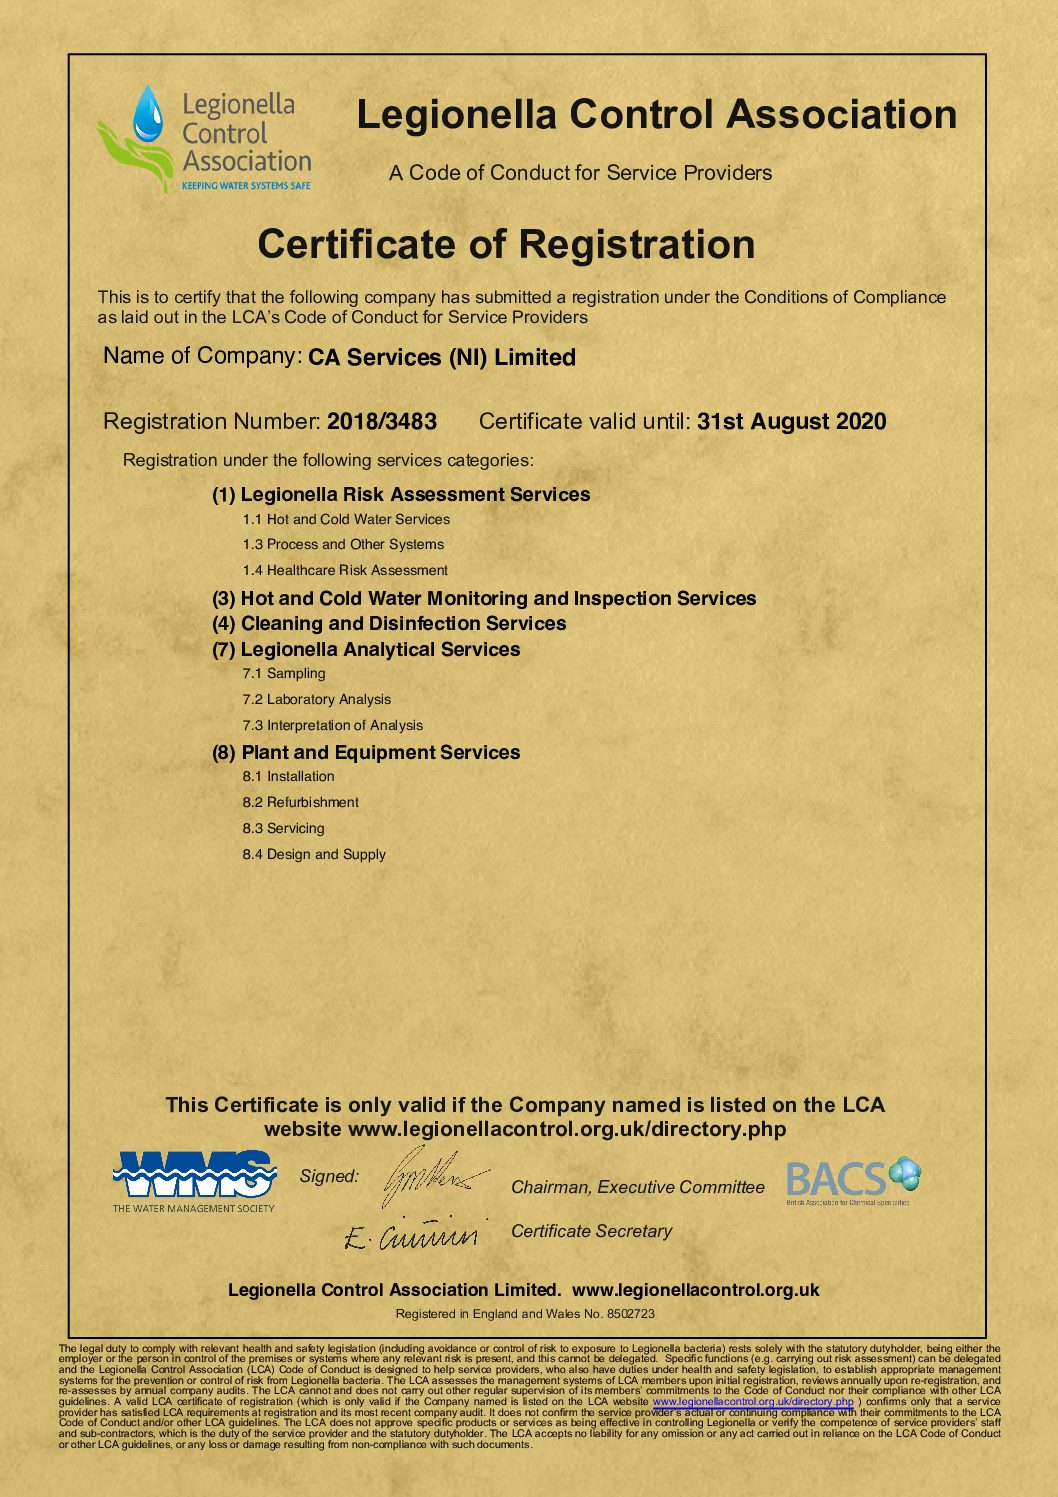 Legionella Control Association certified.